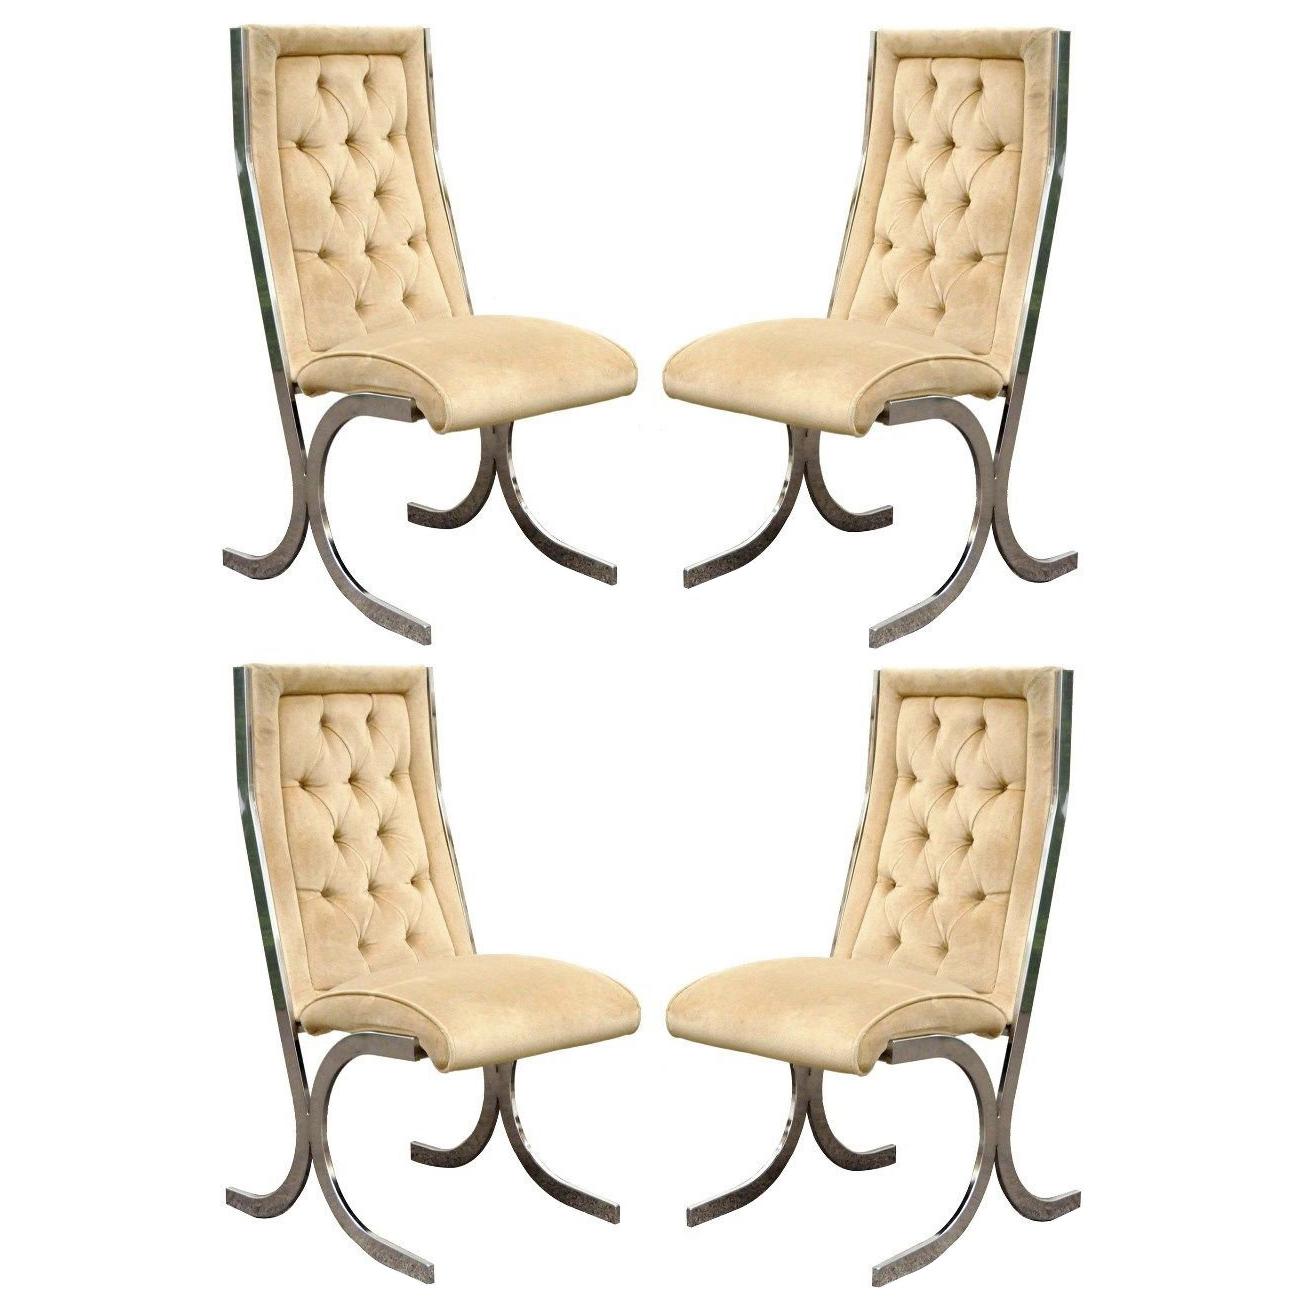 Four Vintage Chrome X-Form Tufted Dining Chairs Milo Baughman Era